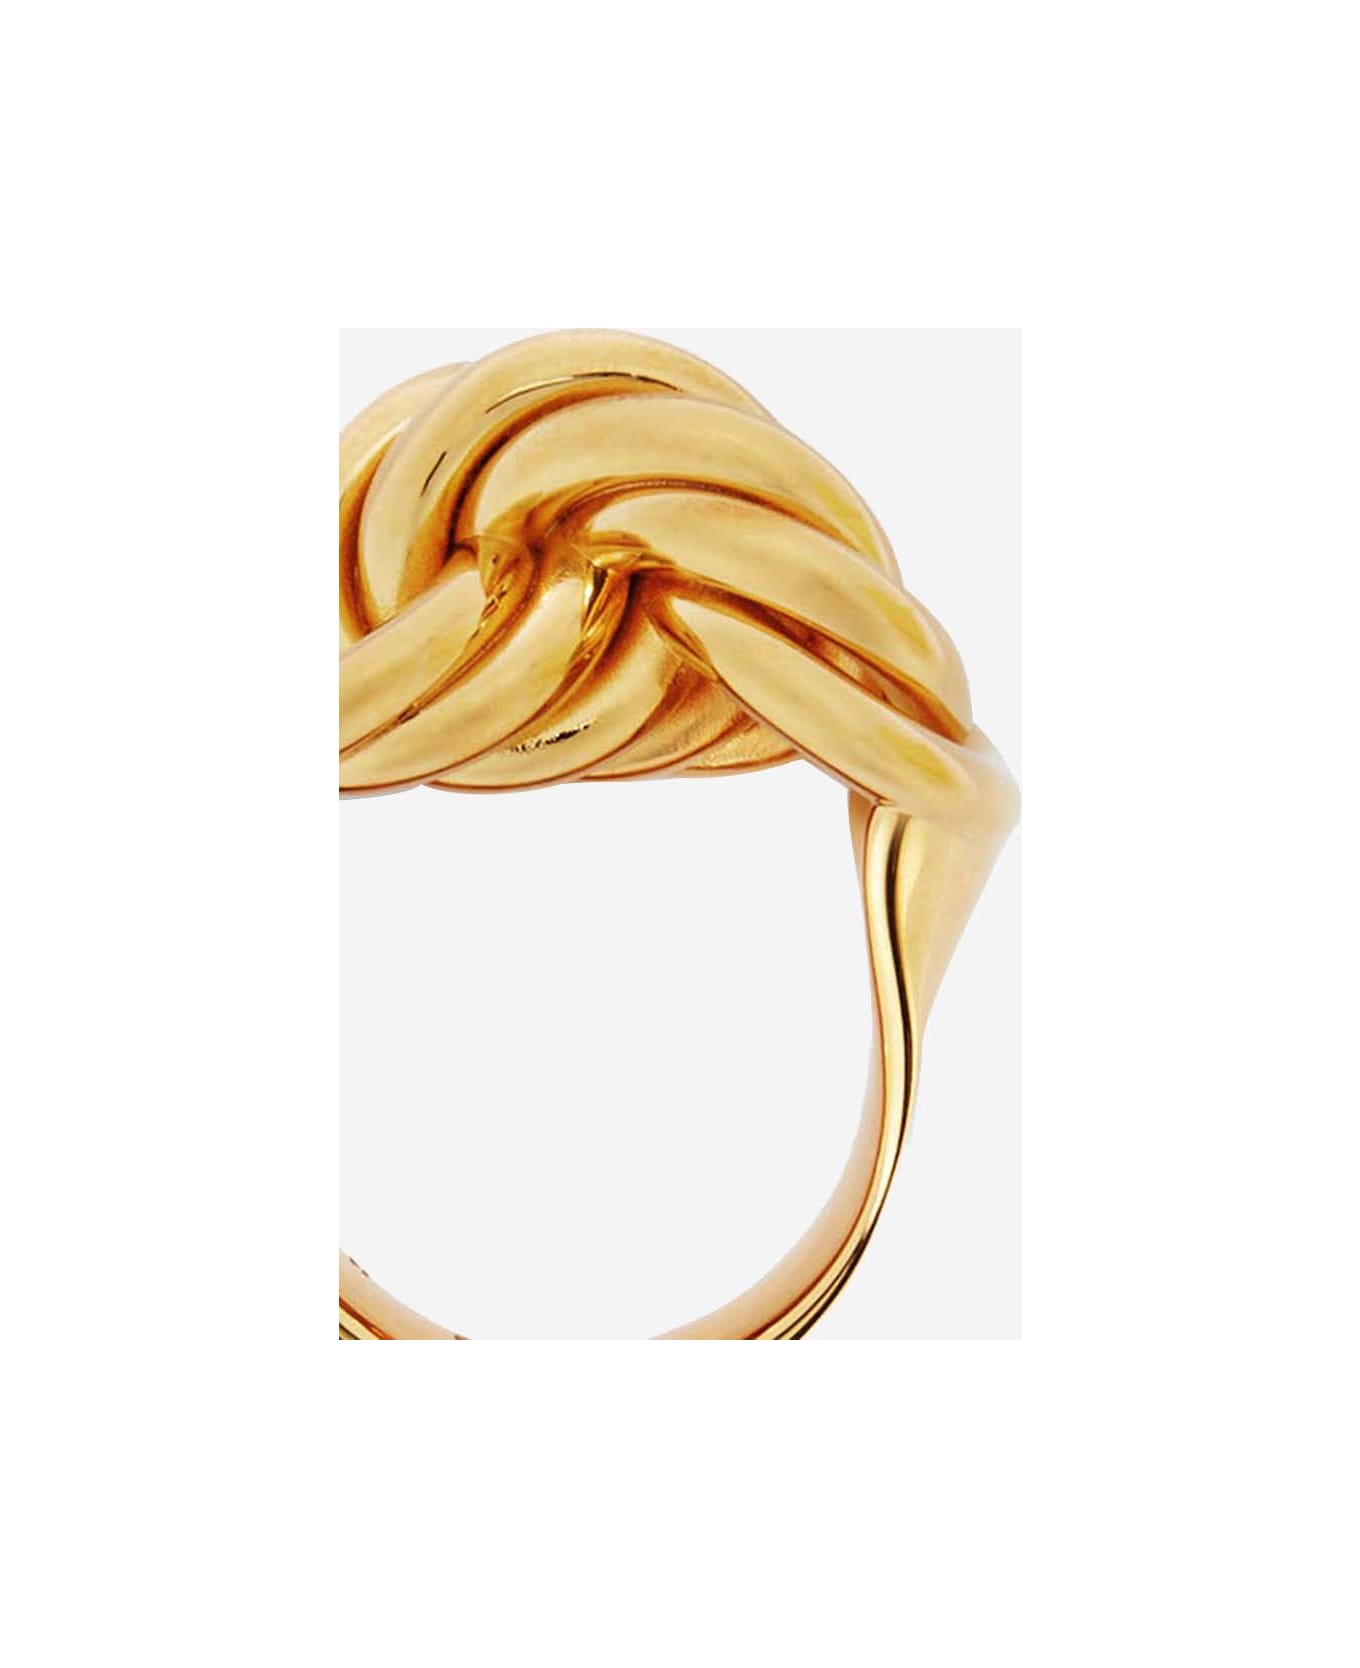 Jil Sander Brass Ring With Braided Detail - Golden